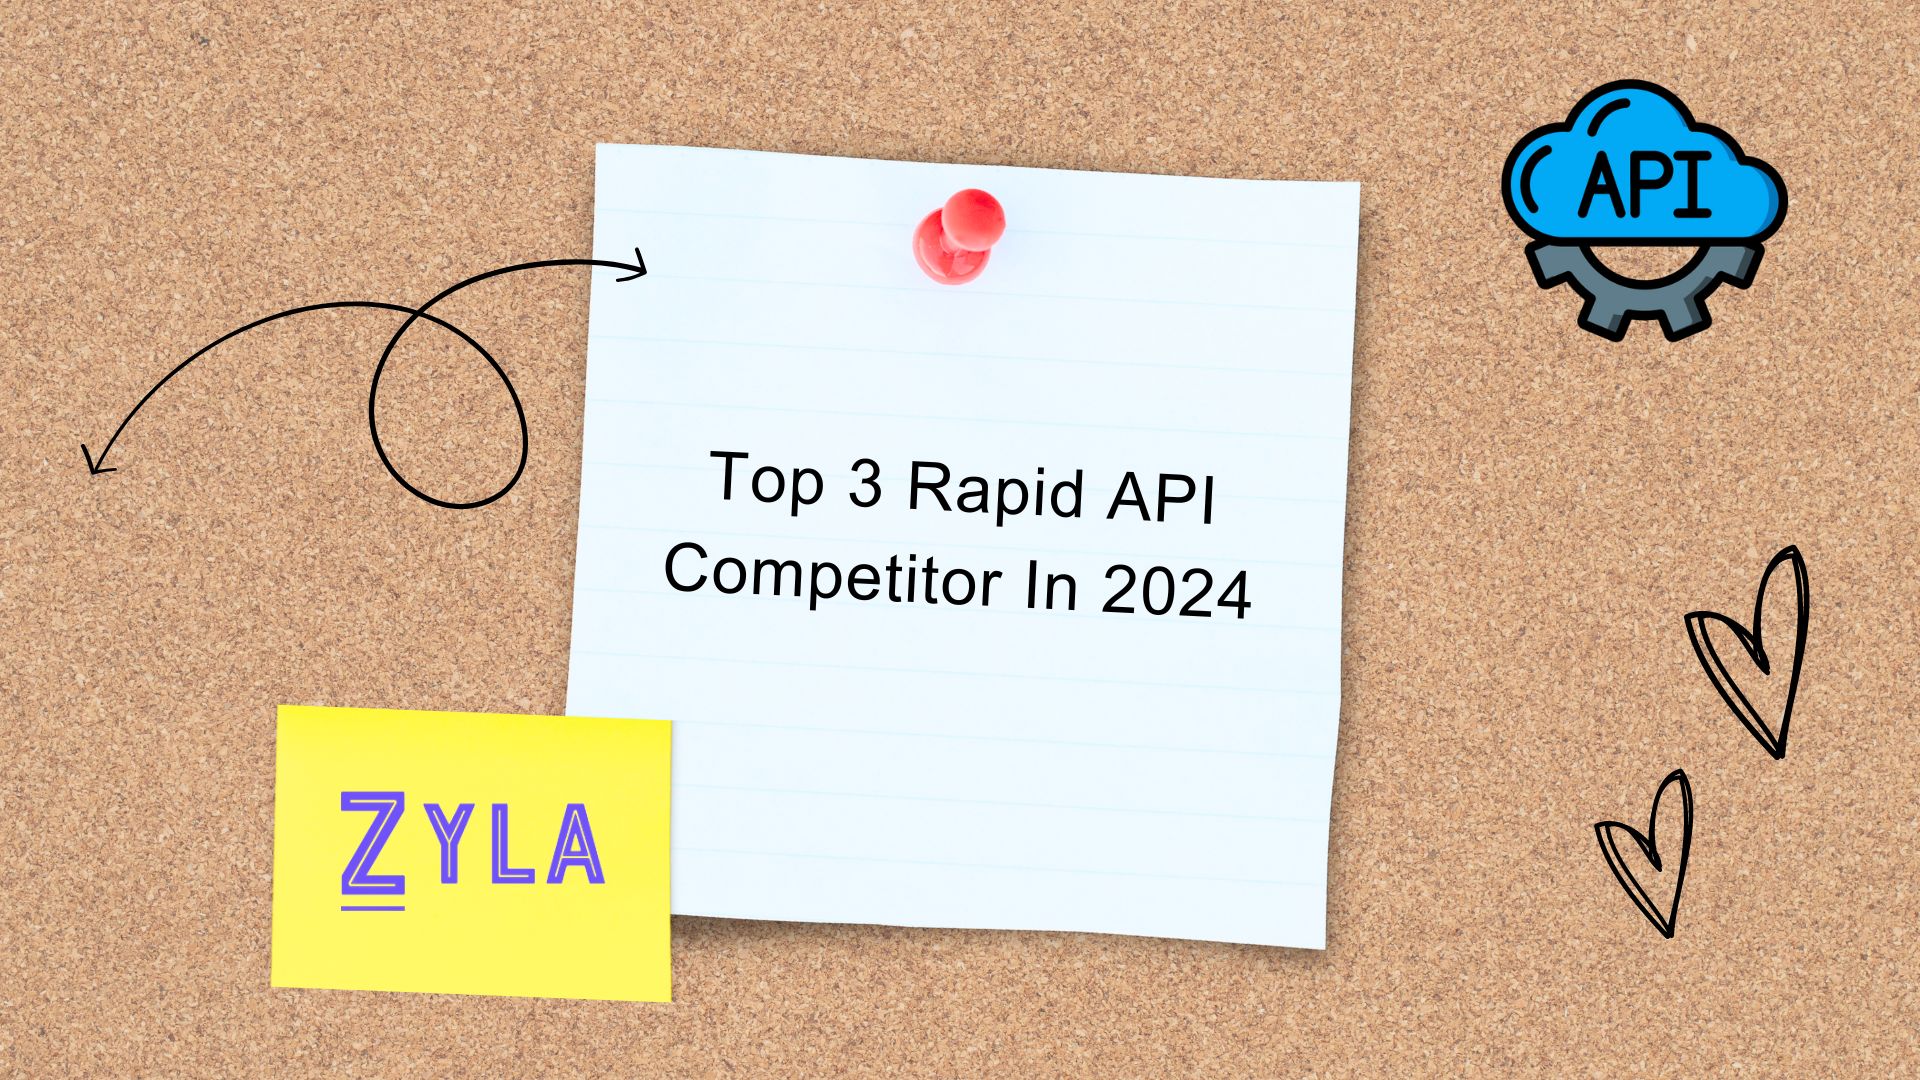 Top 3 Rapid API Competitor In 2024